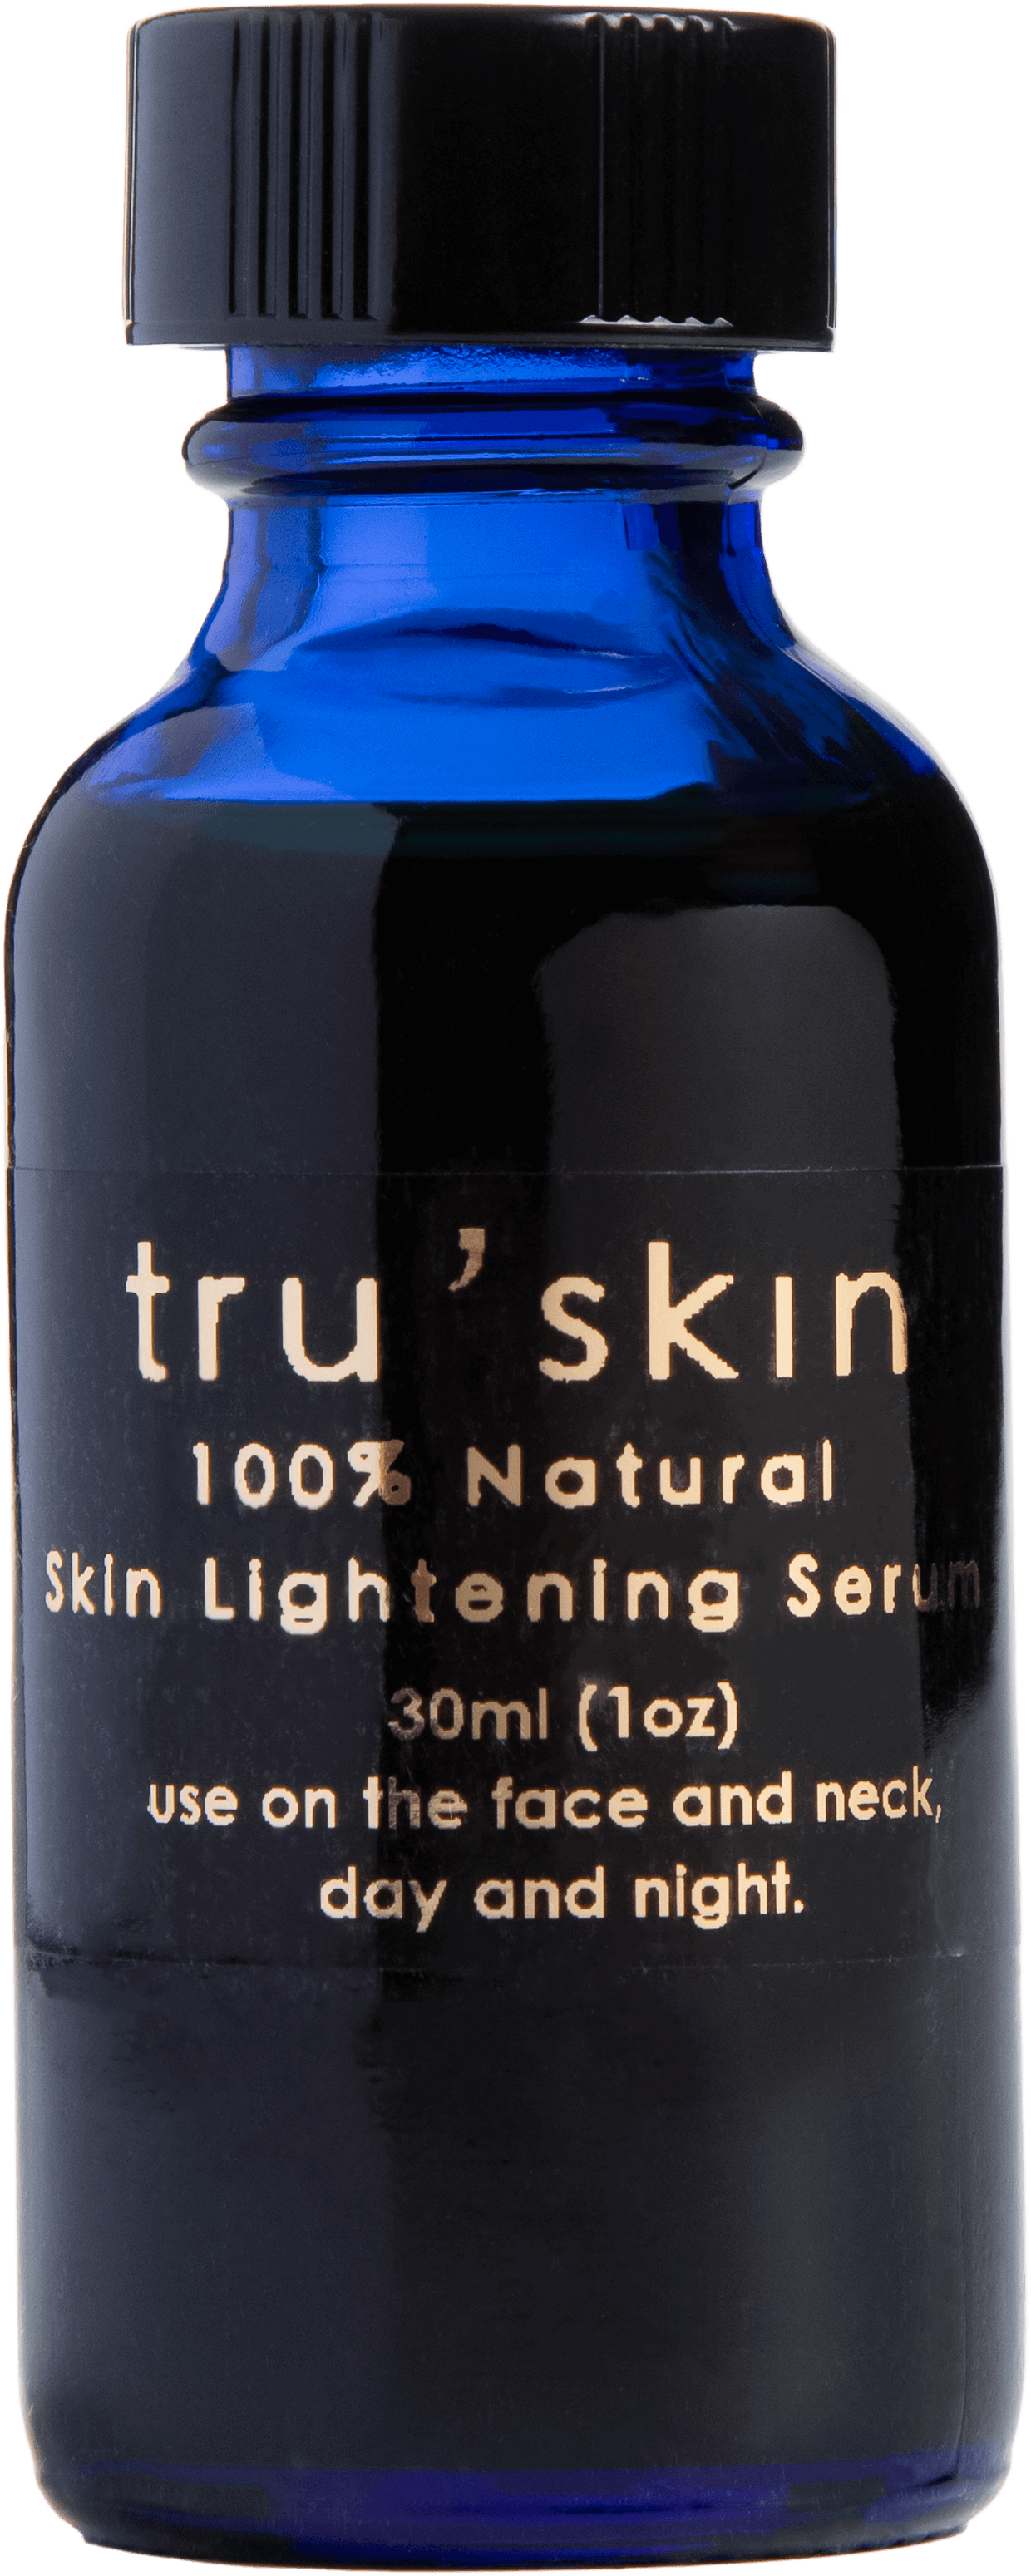 Tru’ Skin Skin Lightening Serum